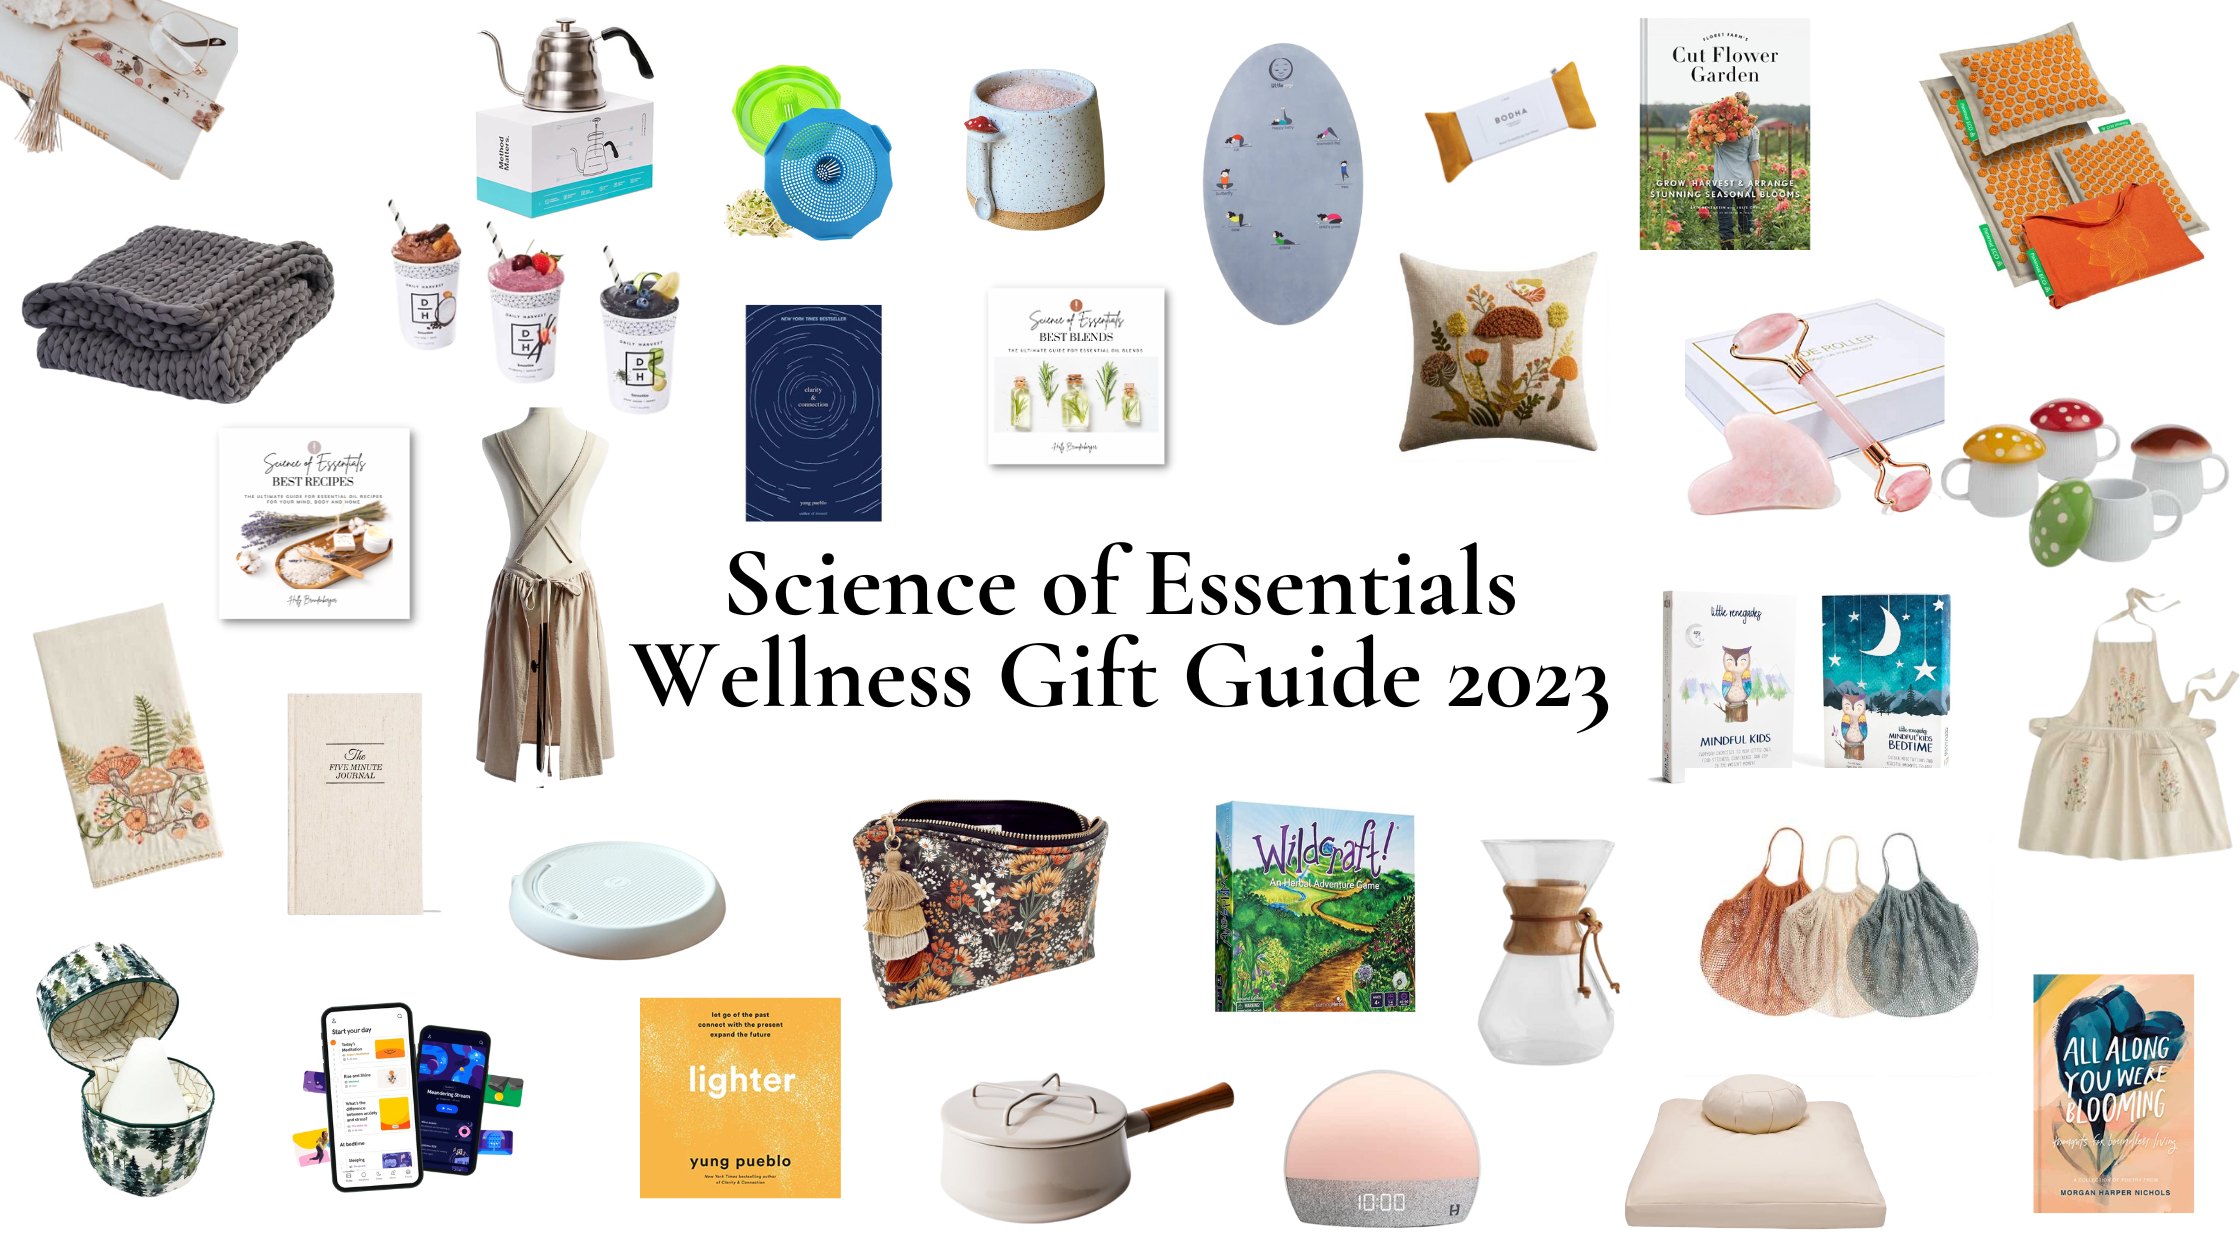 Science of Essentials Best Blends Book 